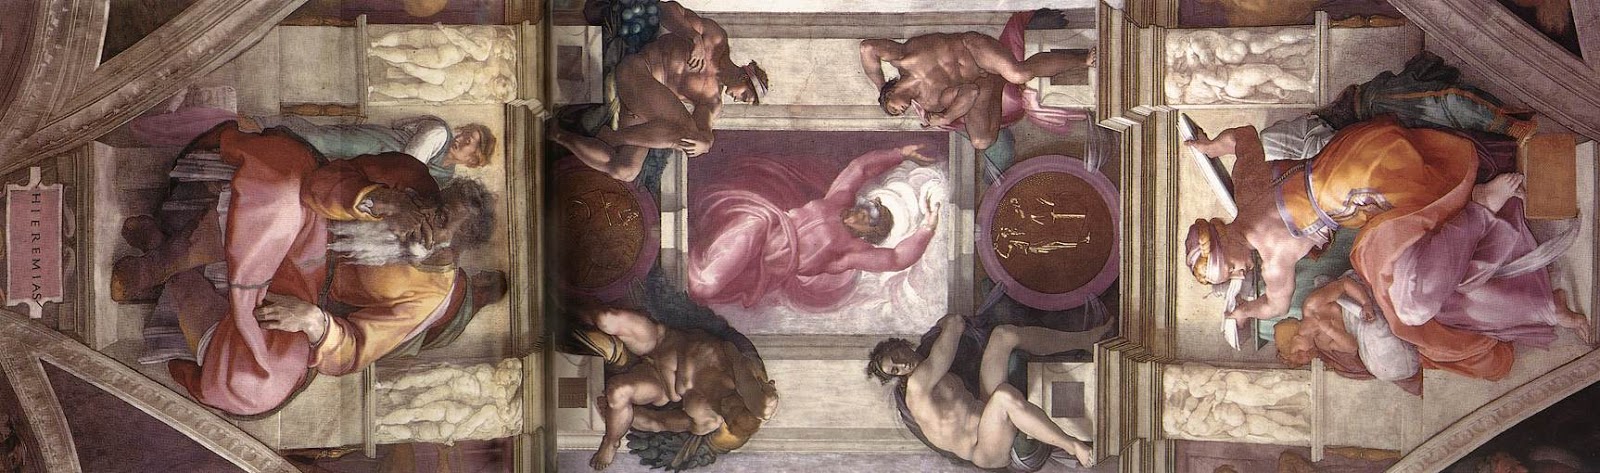 Michelangelo+Buonarroti-1475-1564 (376).jpg